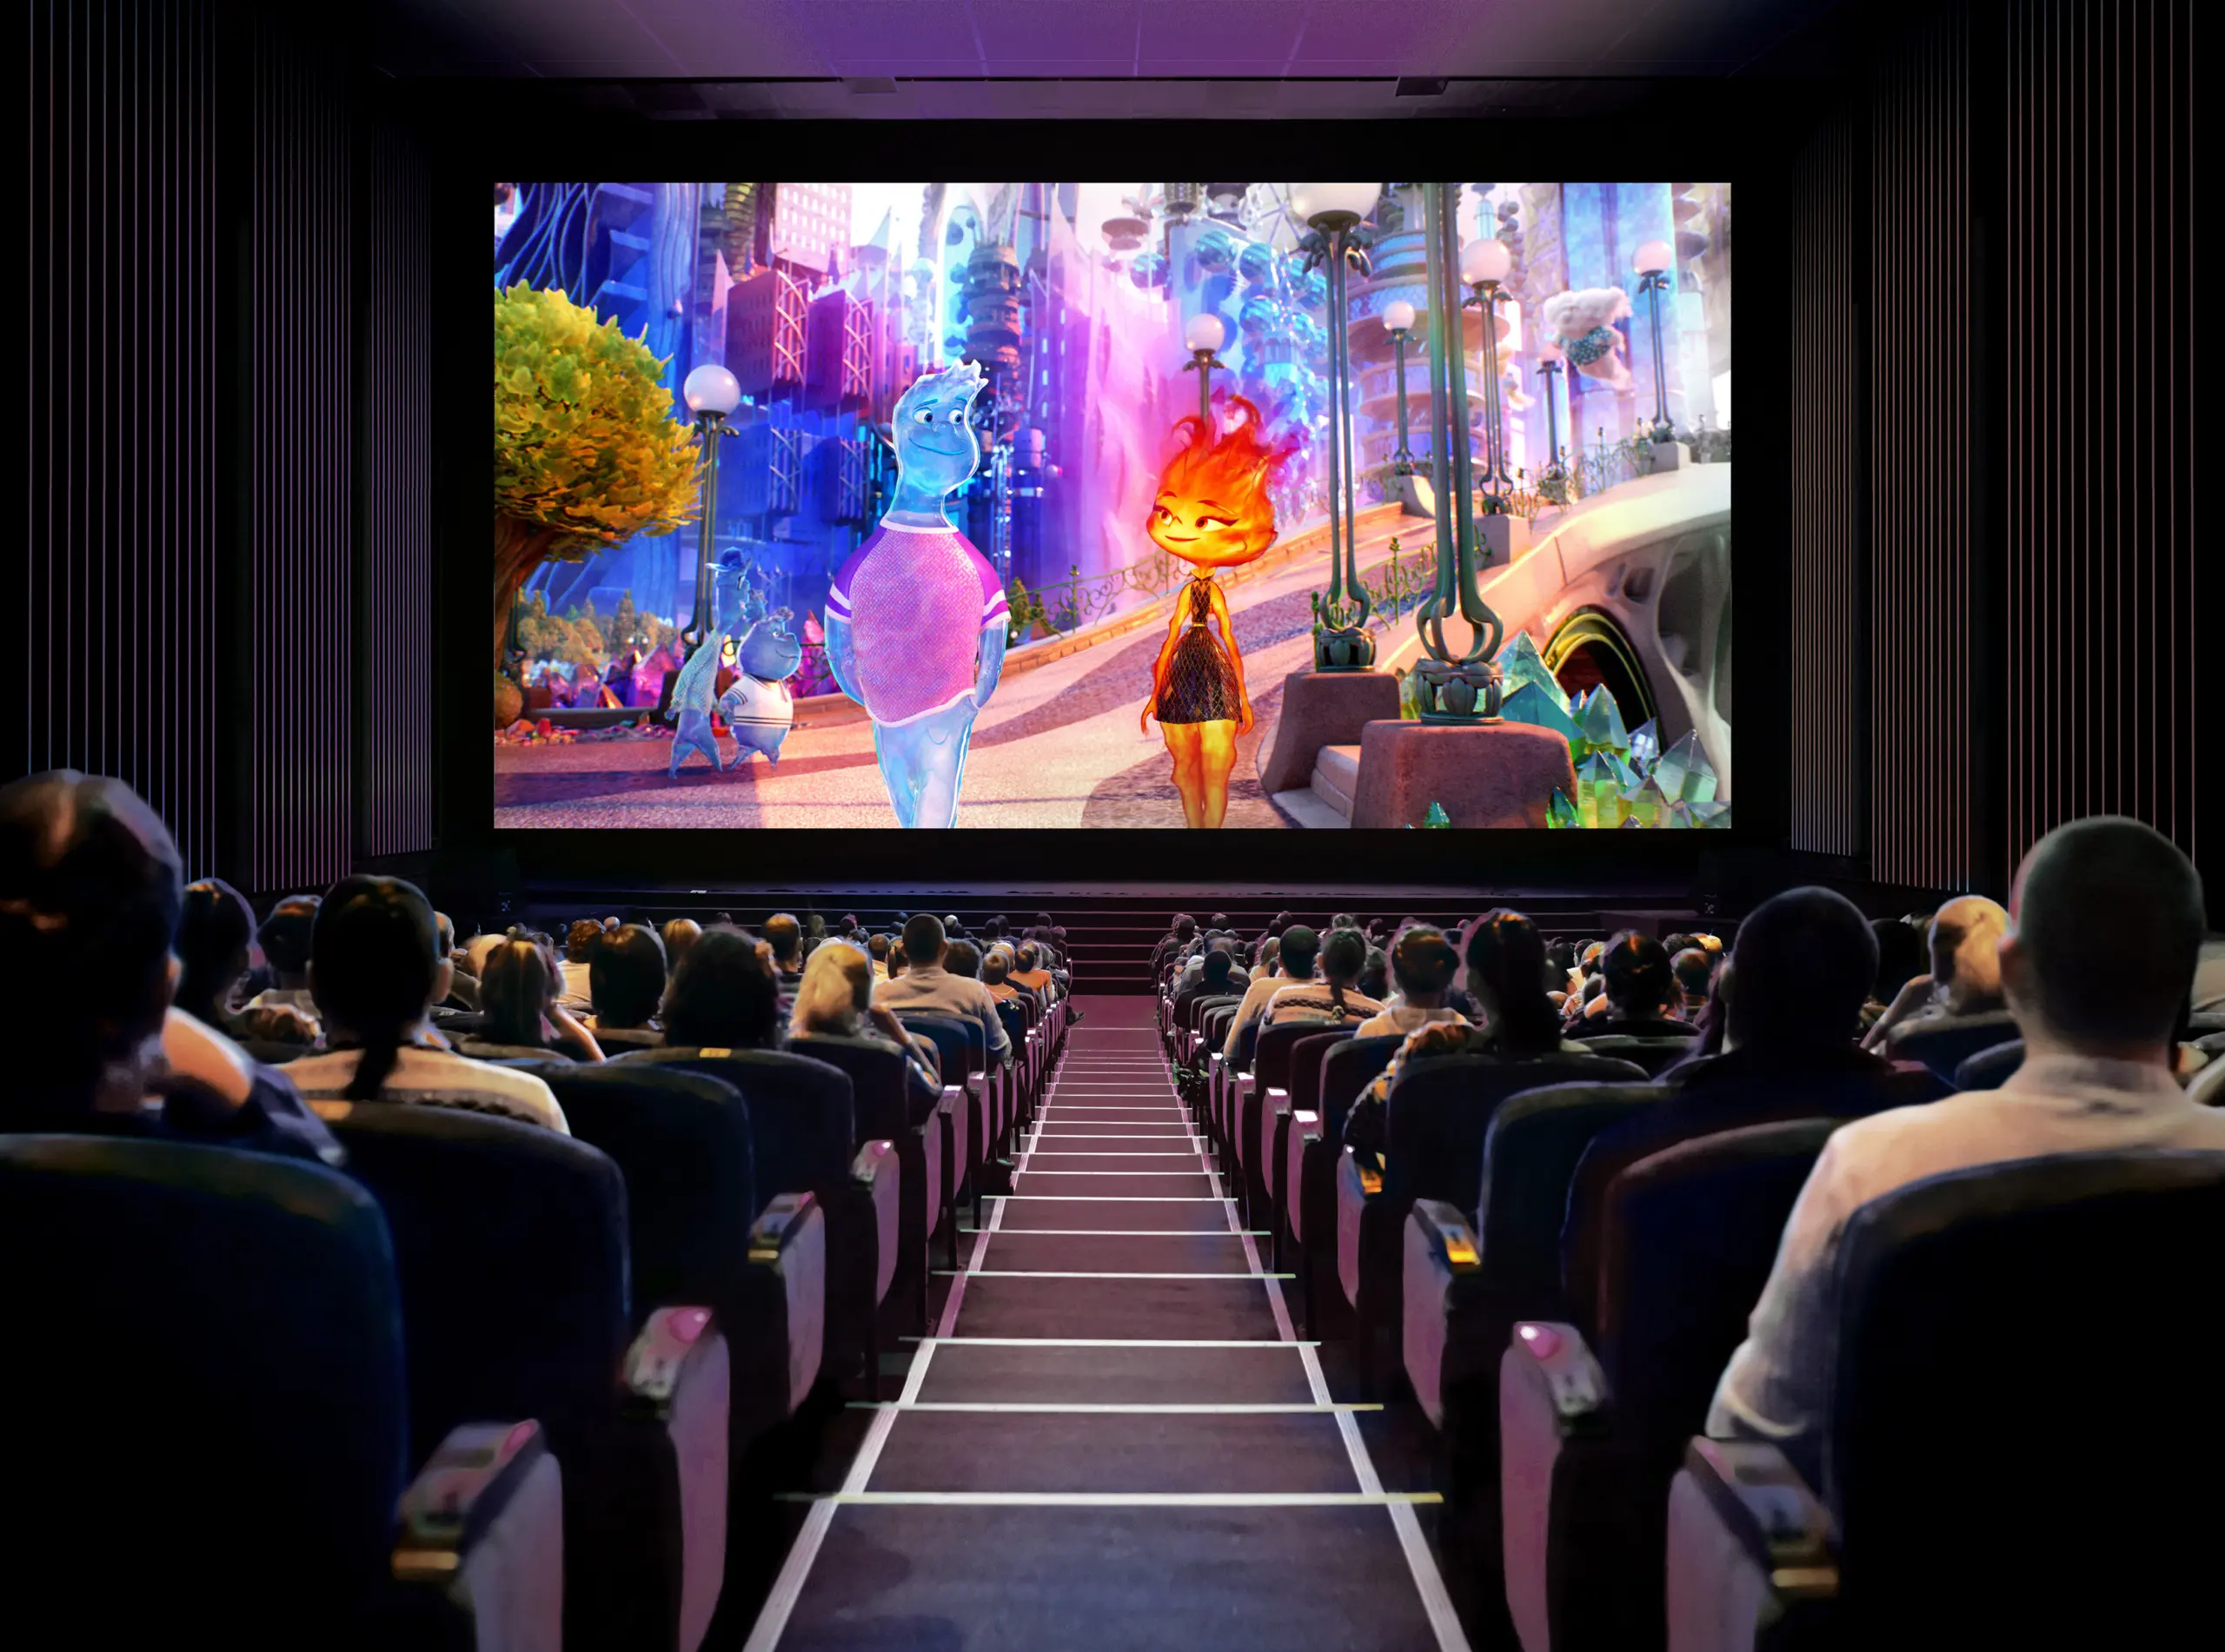 Samsung Onyx LED cinema screen